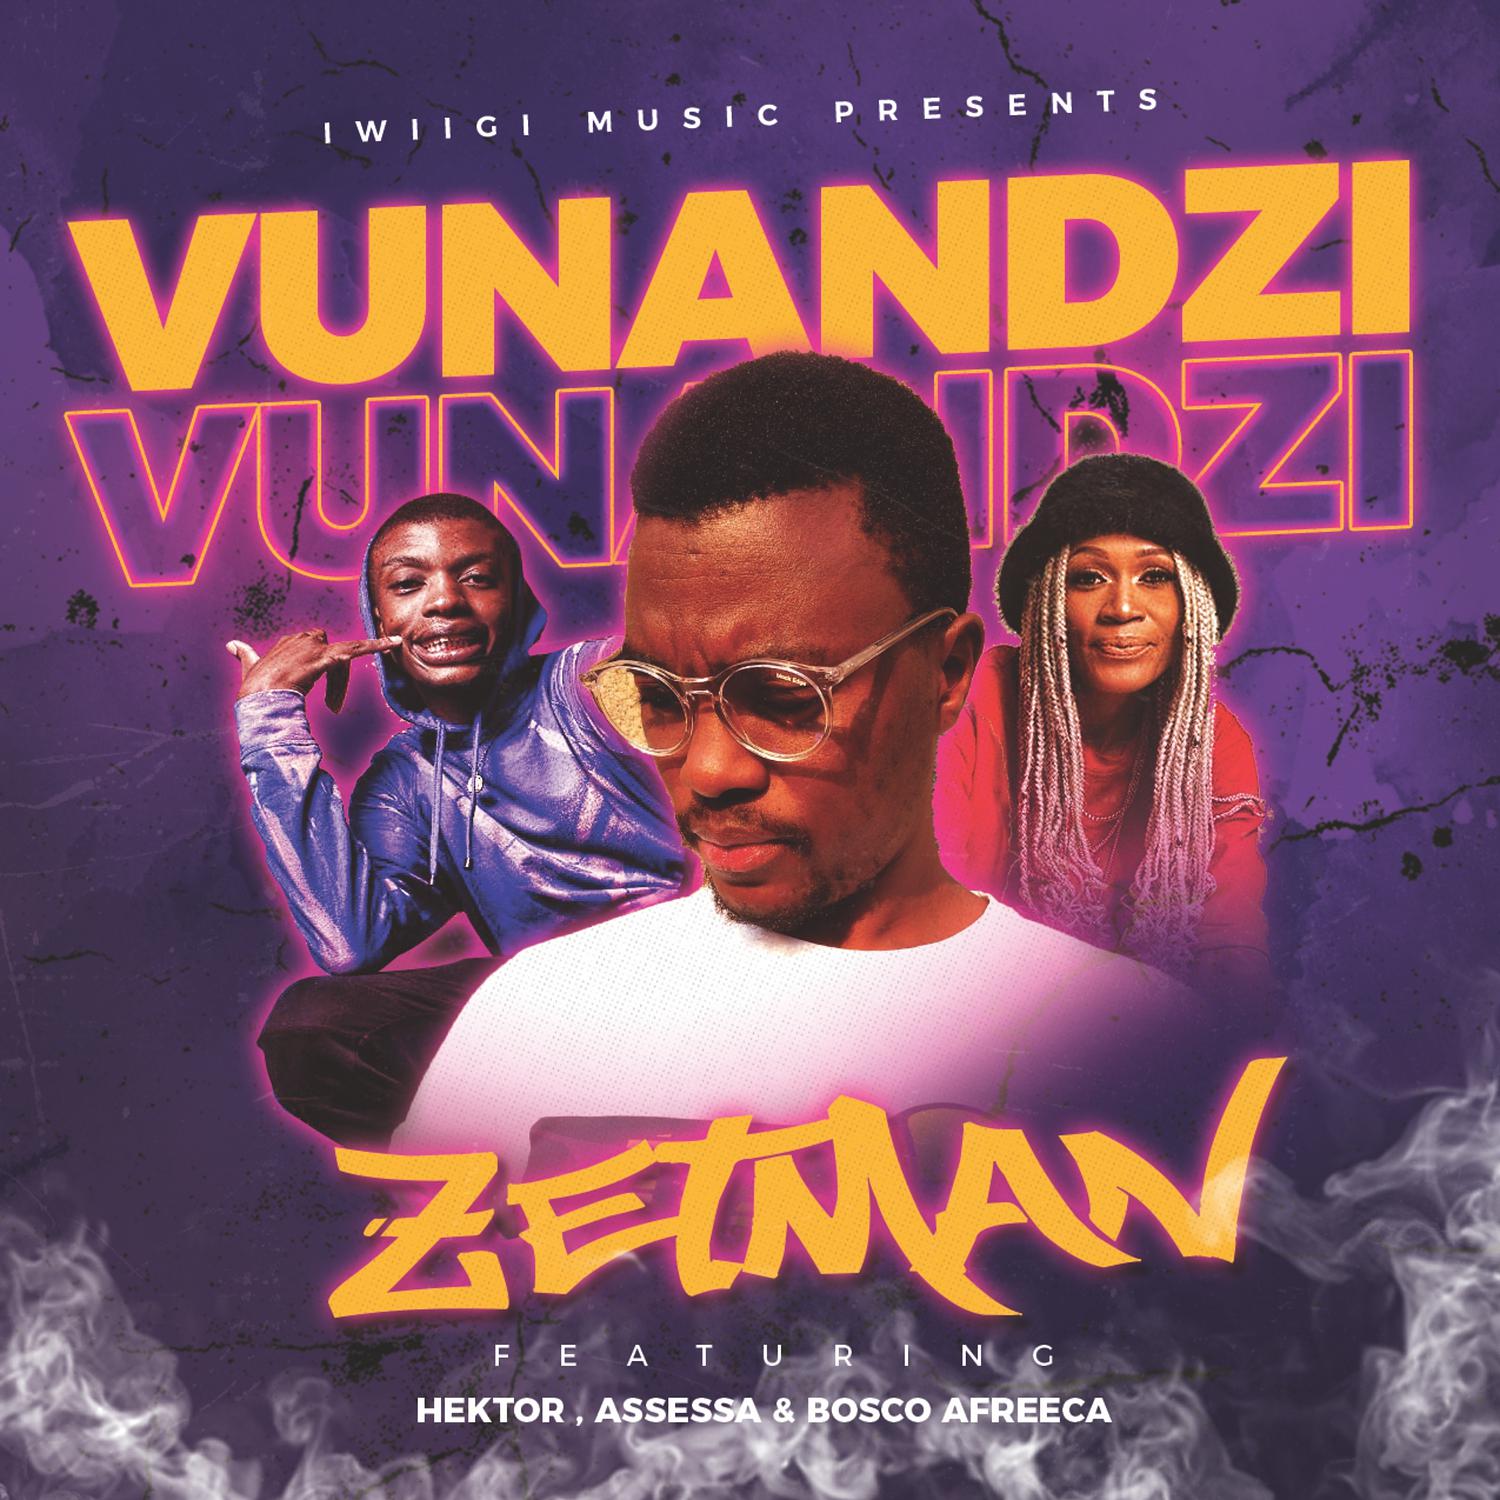 Zetman - Vunandzi